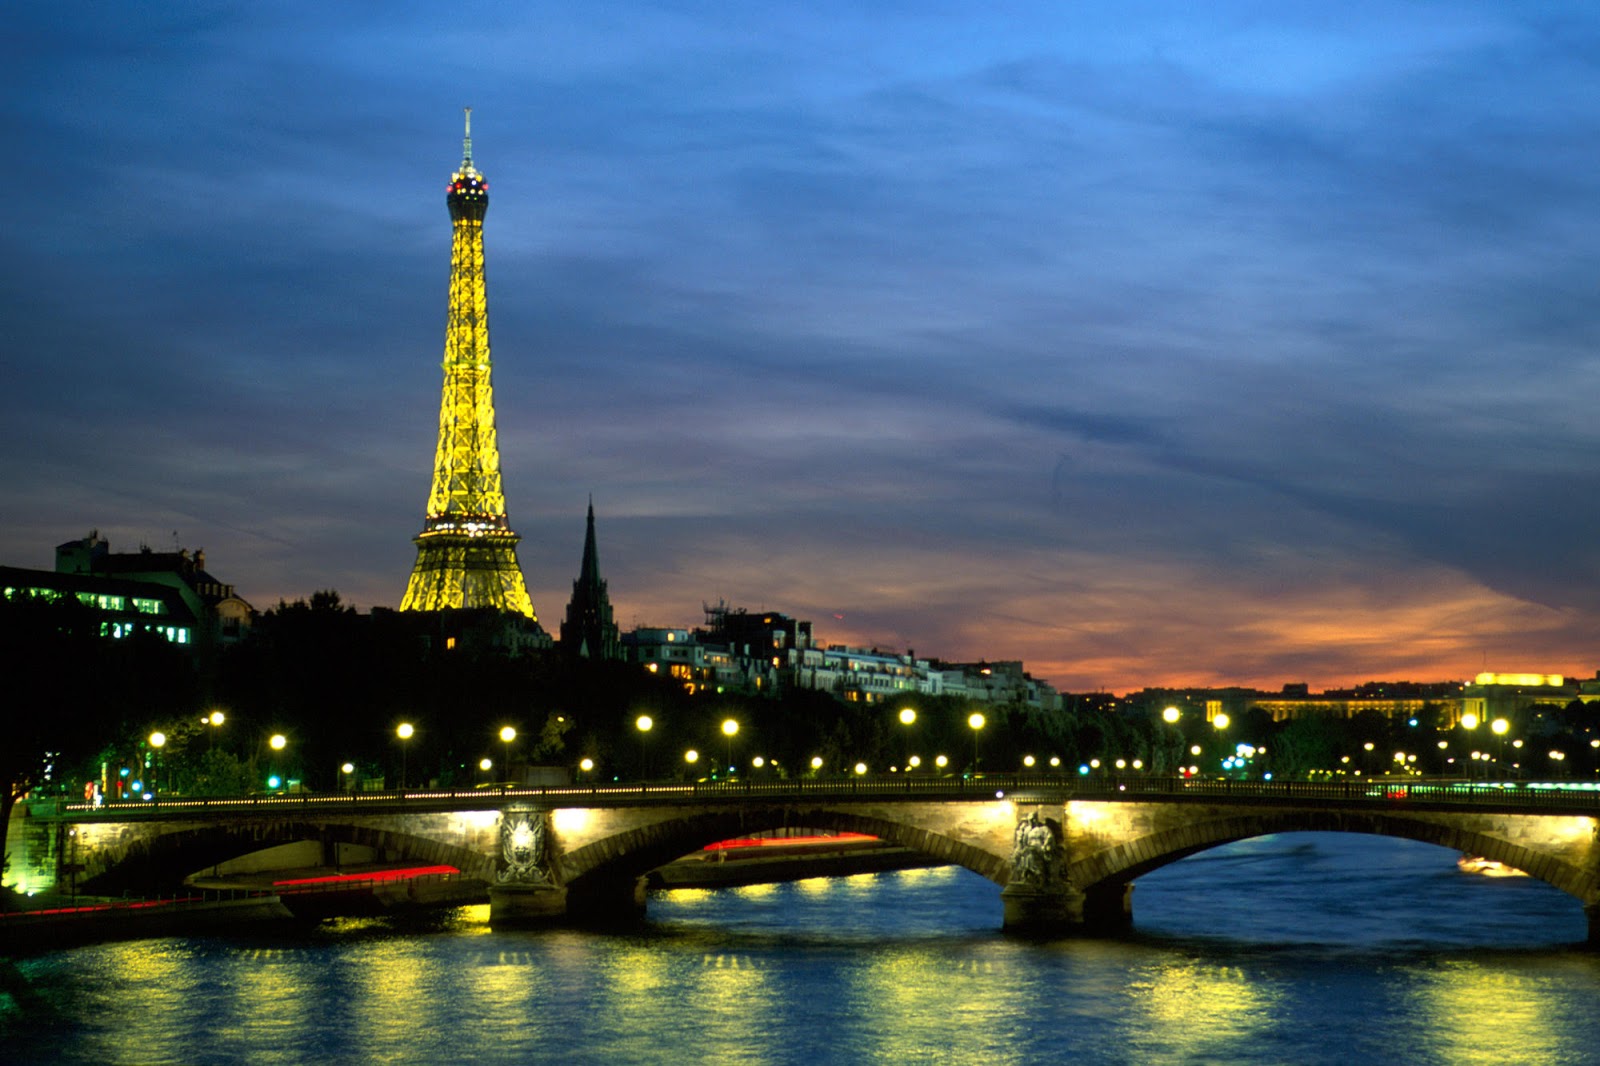 Gambar Animasi Lucu Menara Eiffel Lucu Box